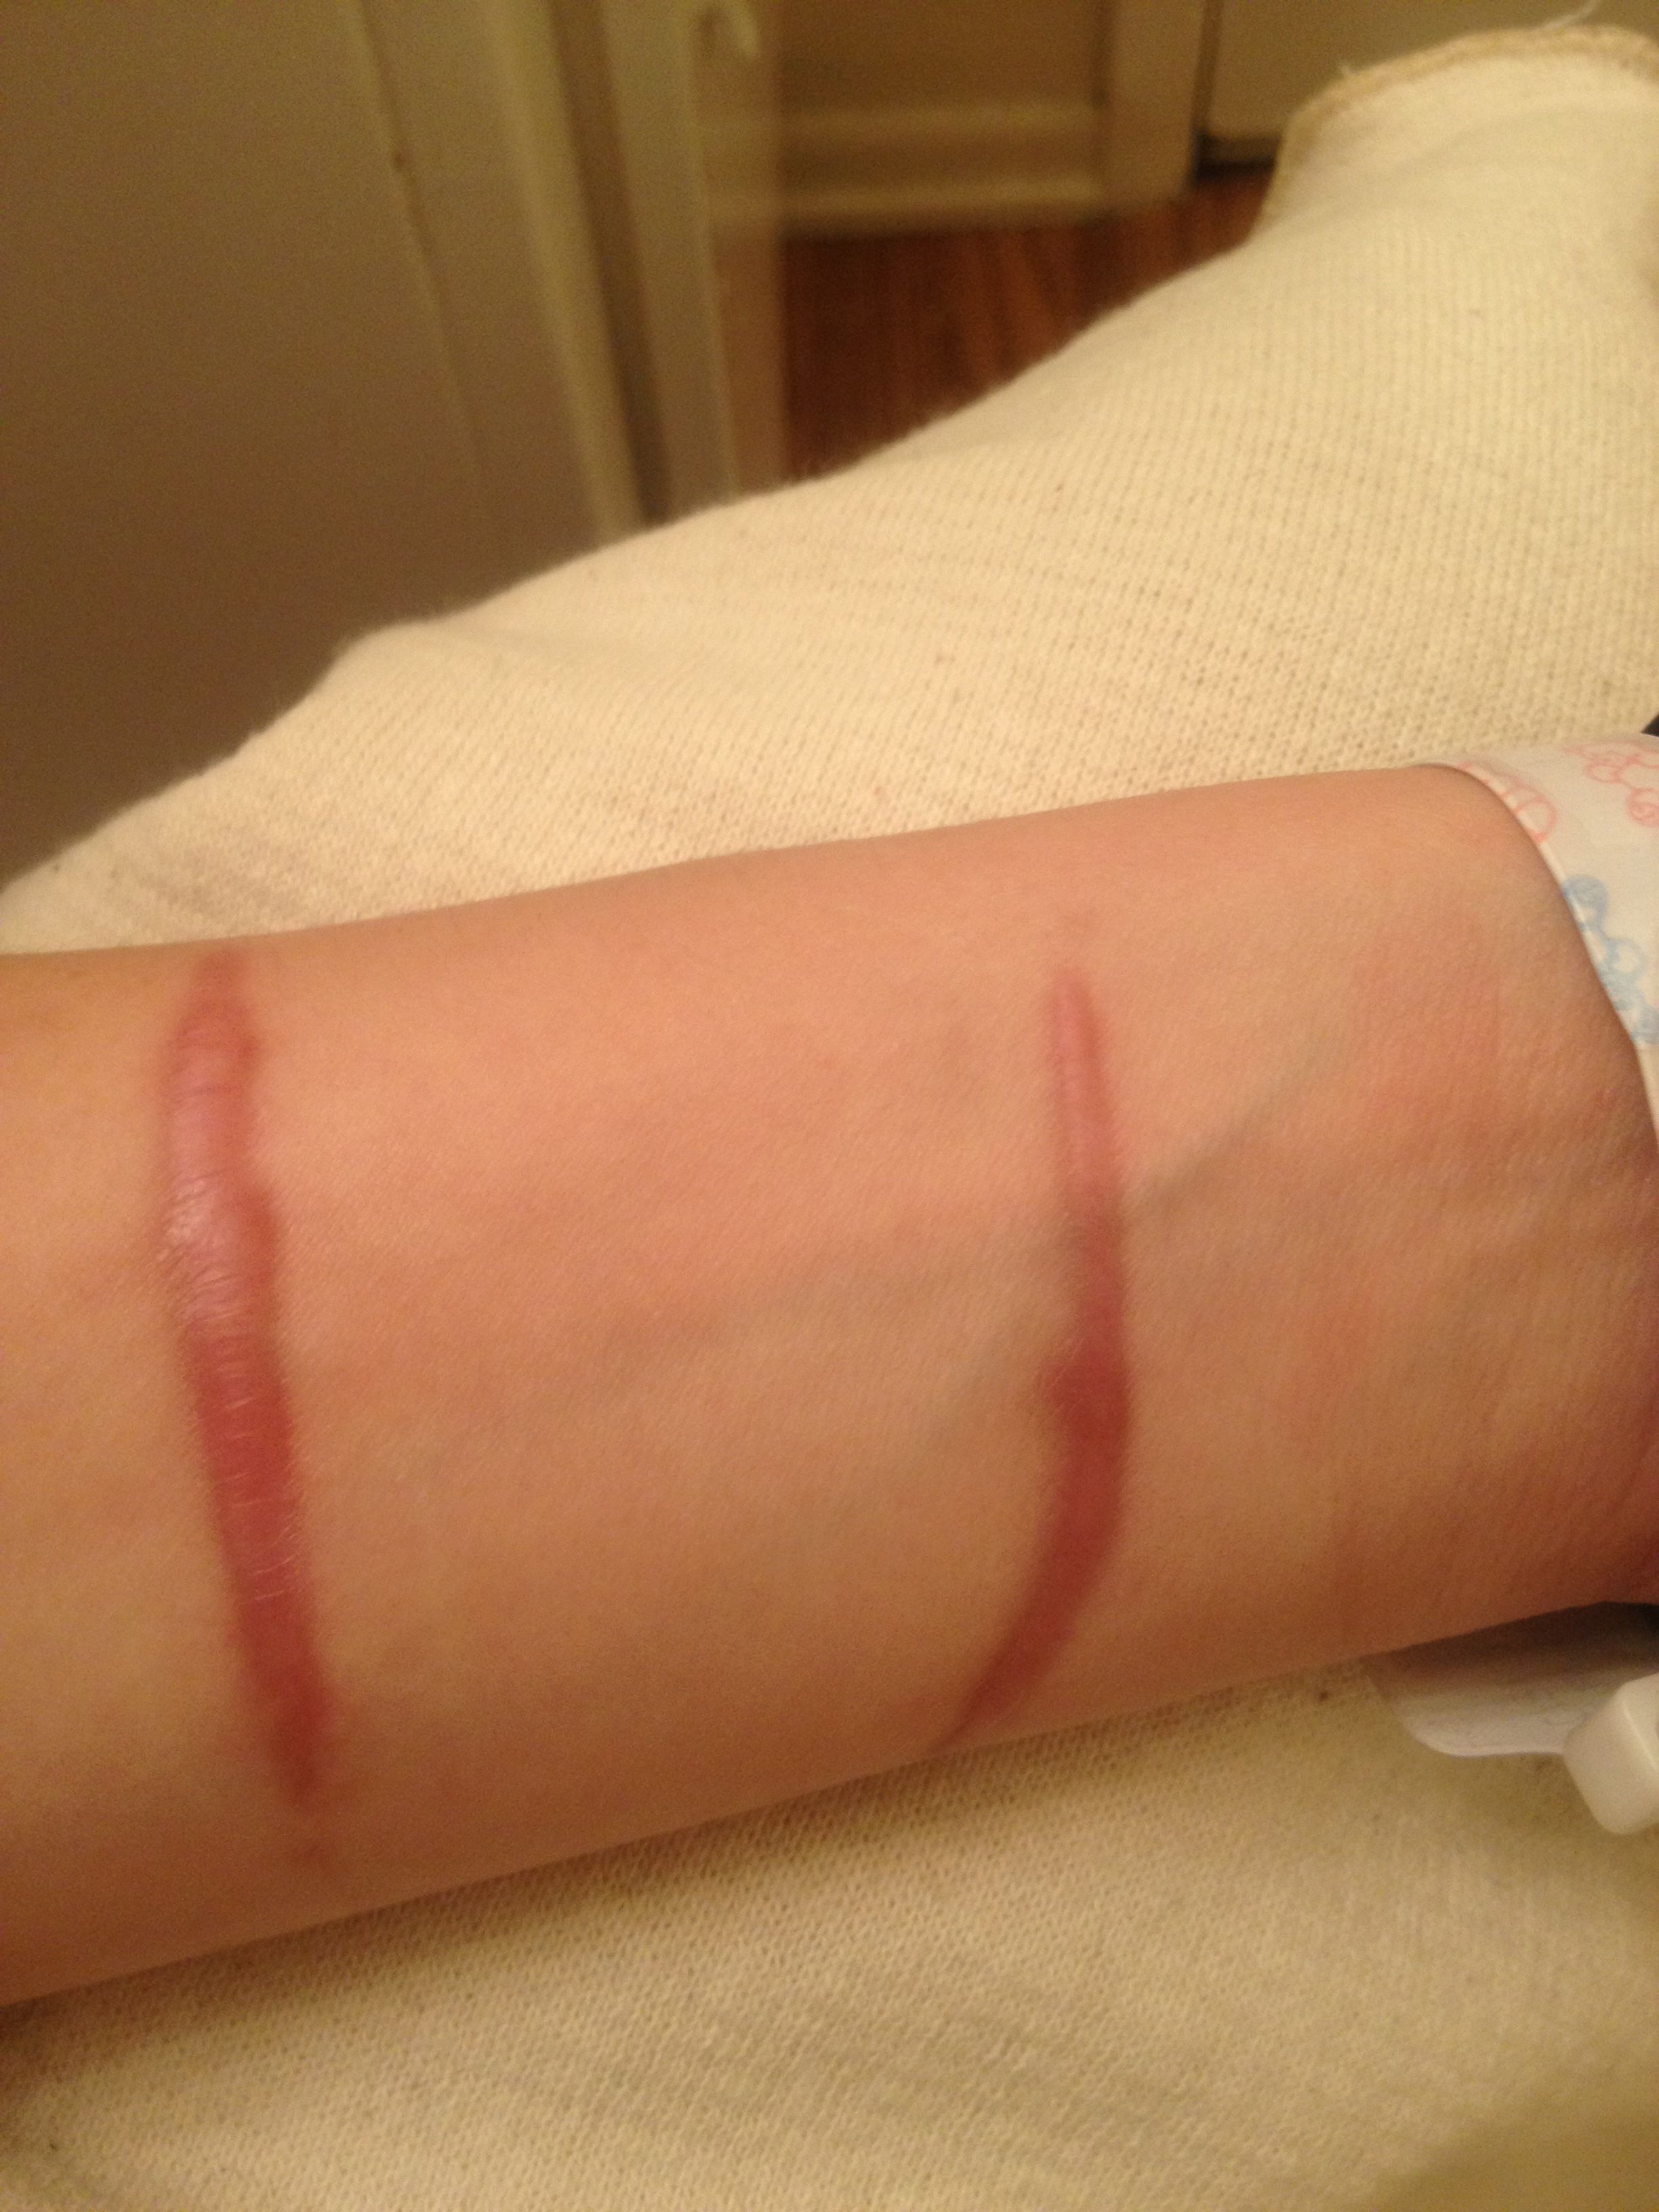 Hypertrophic scar -4 months after incident- 2013-04-05 00-46